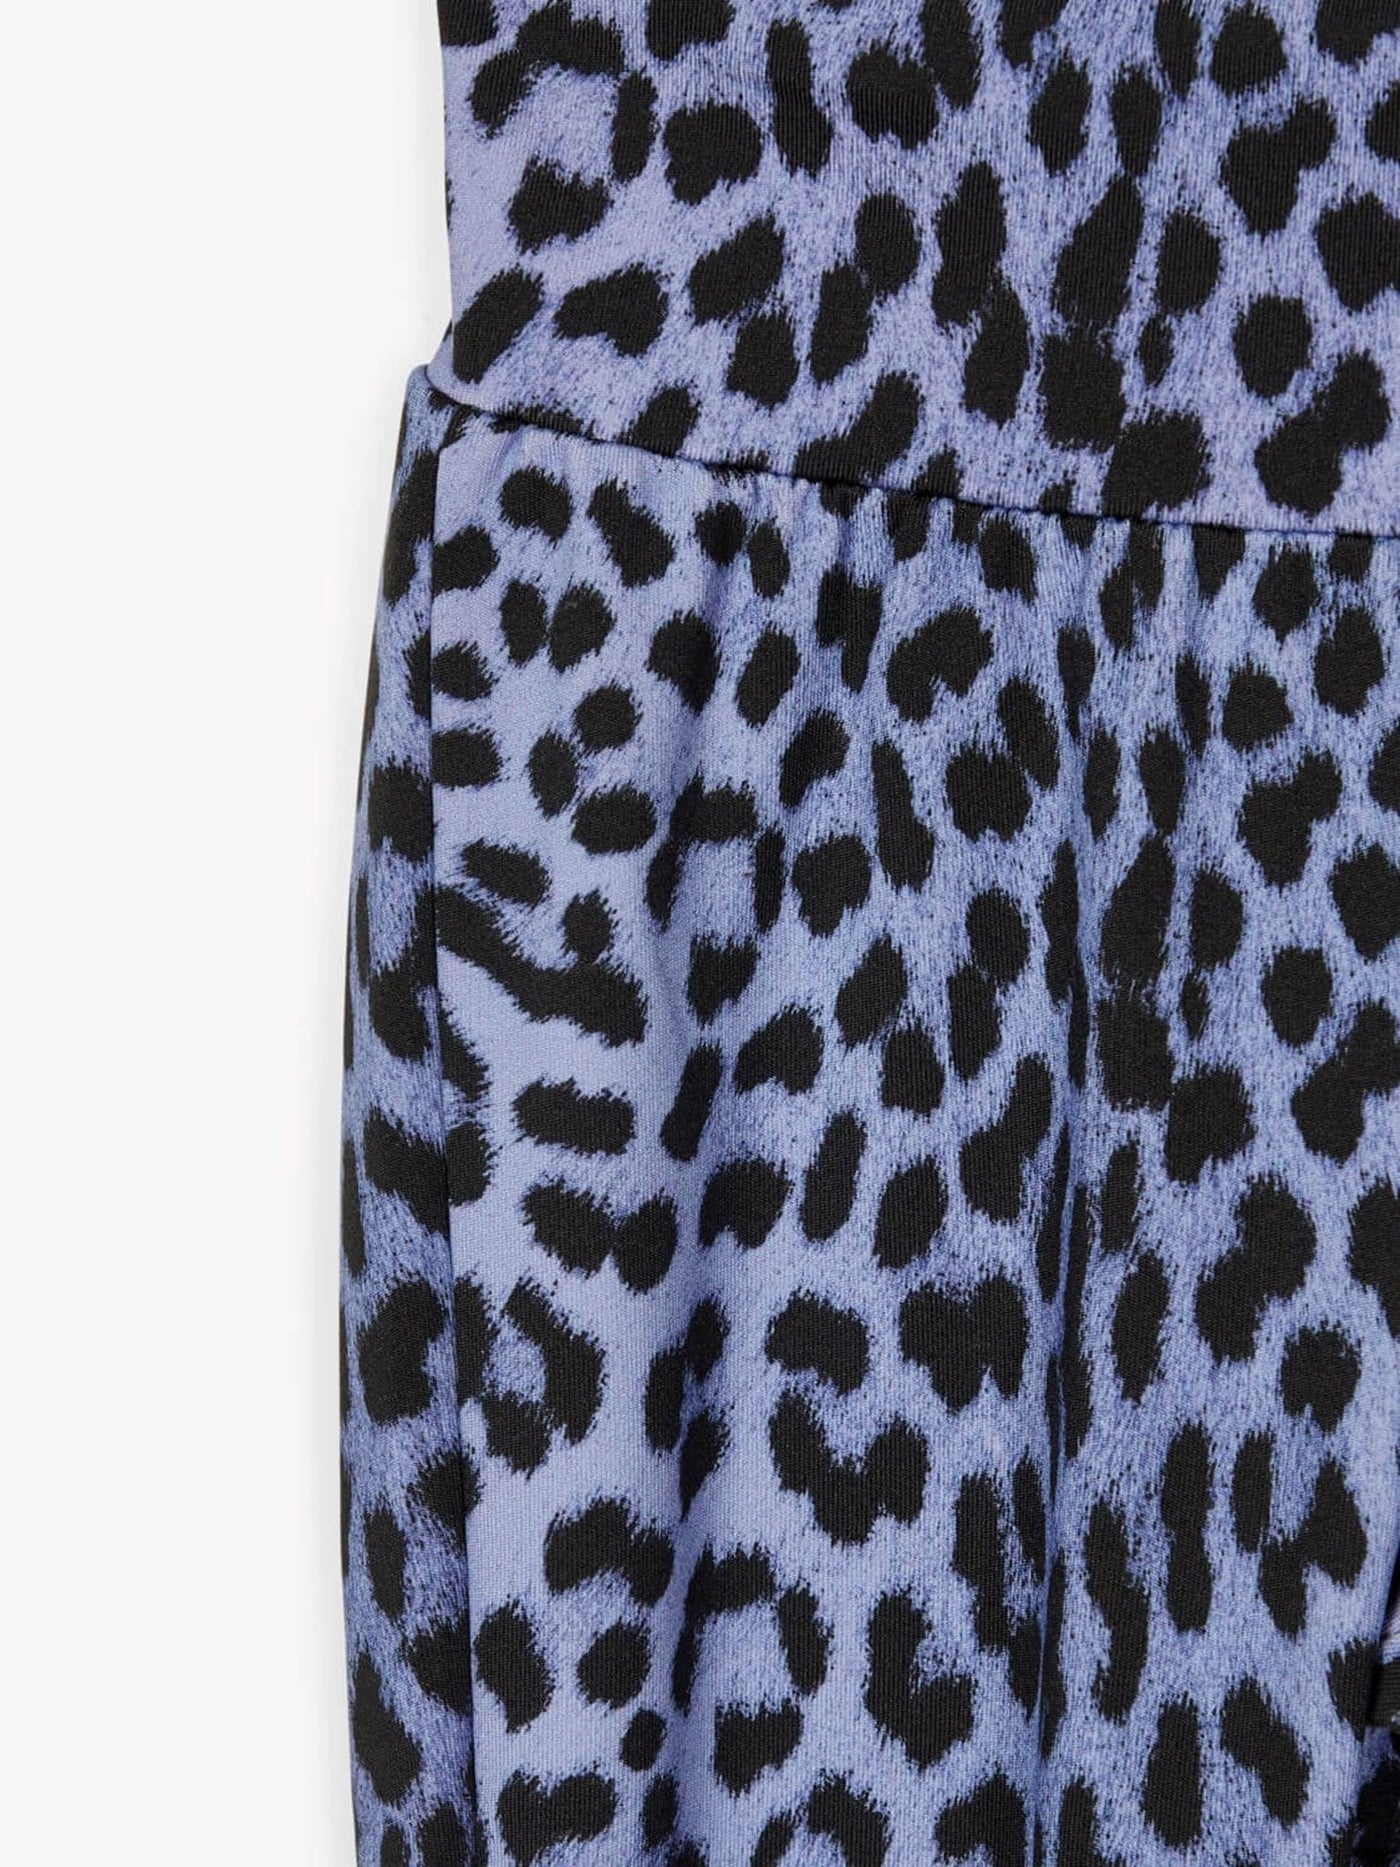 Patterned leggings - Blue leopard - Name It - Blue 4